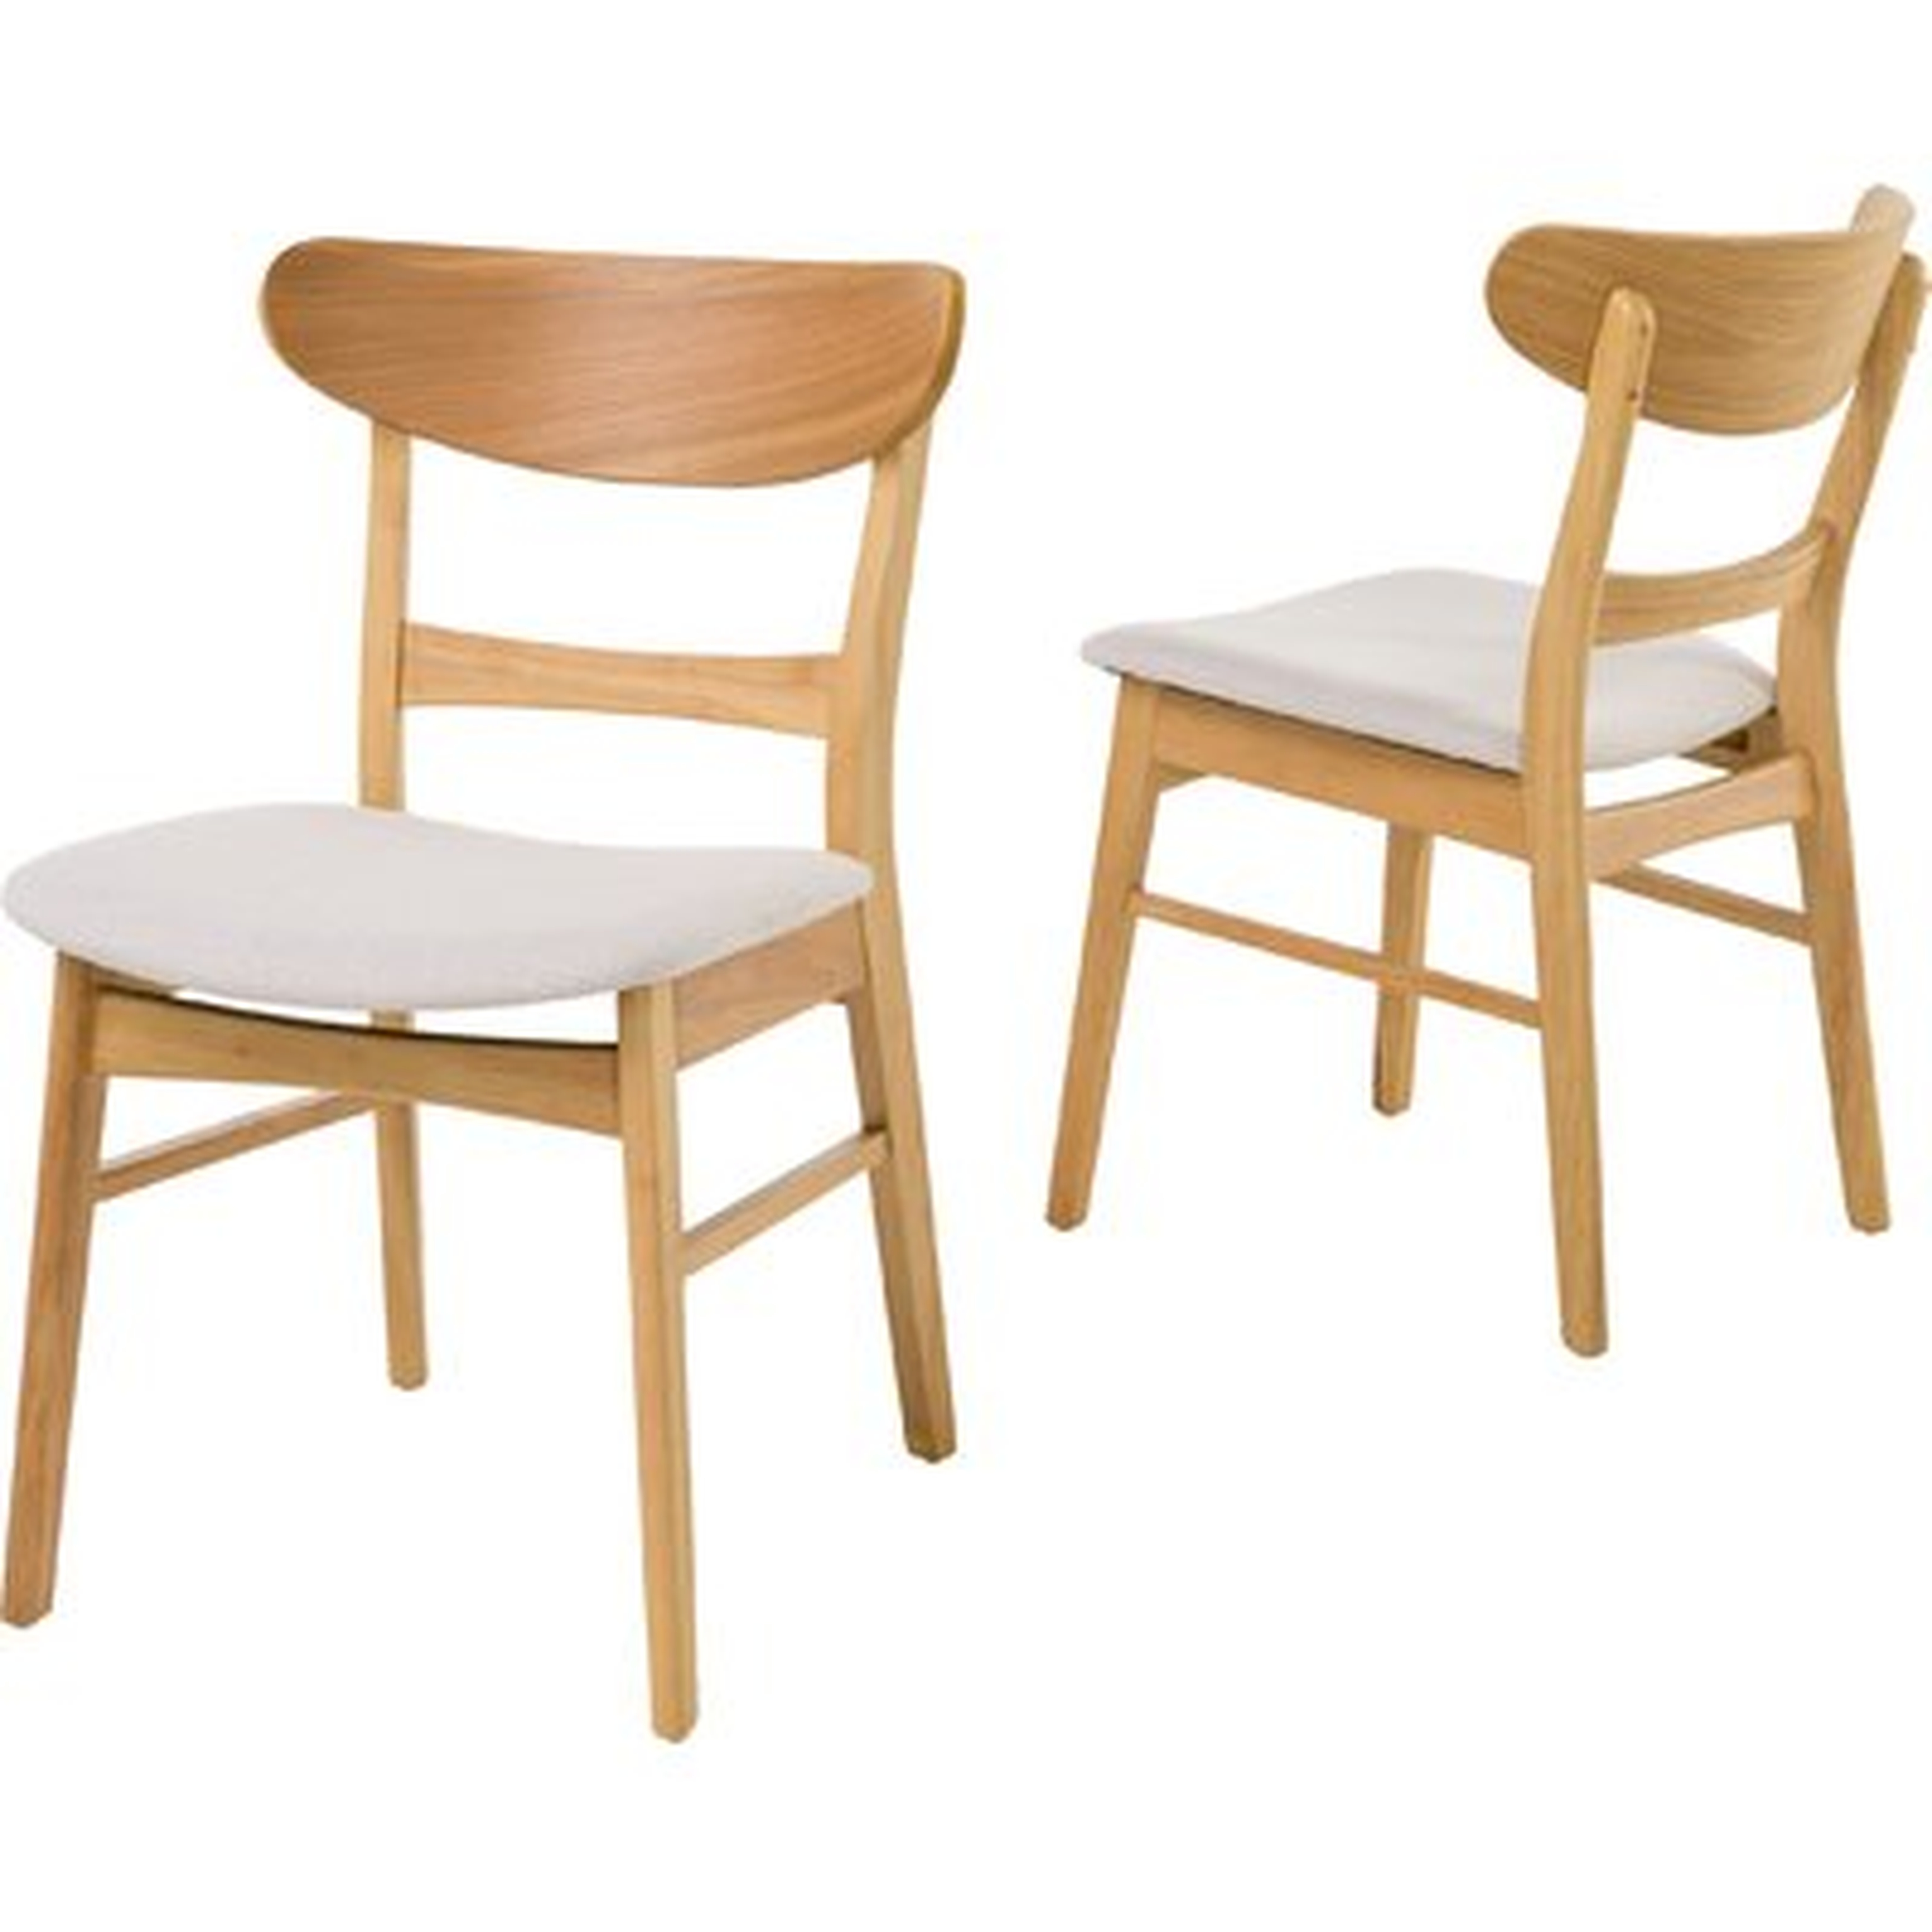 Chisdock Solid Wood Dining Chair - Wayfair